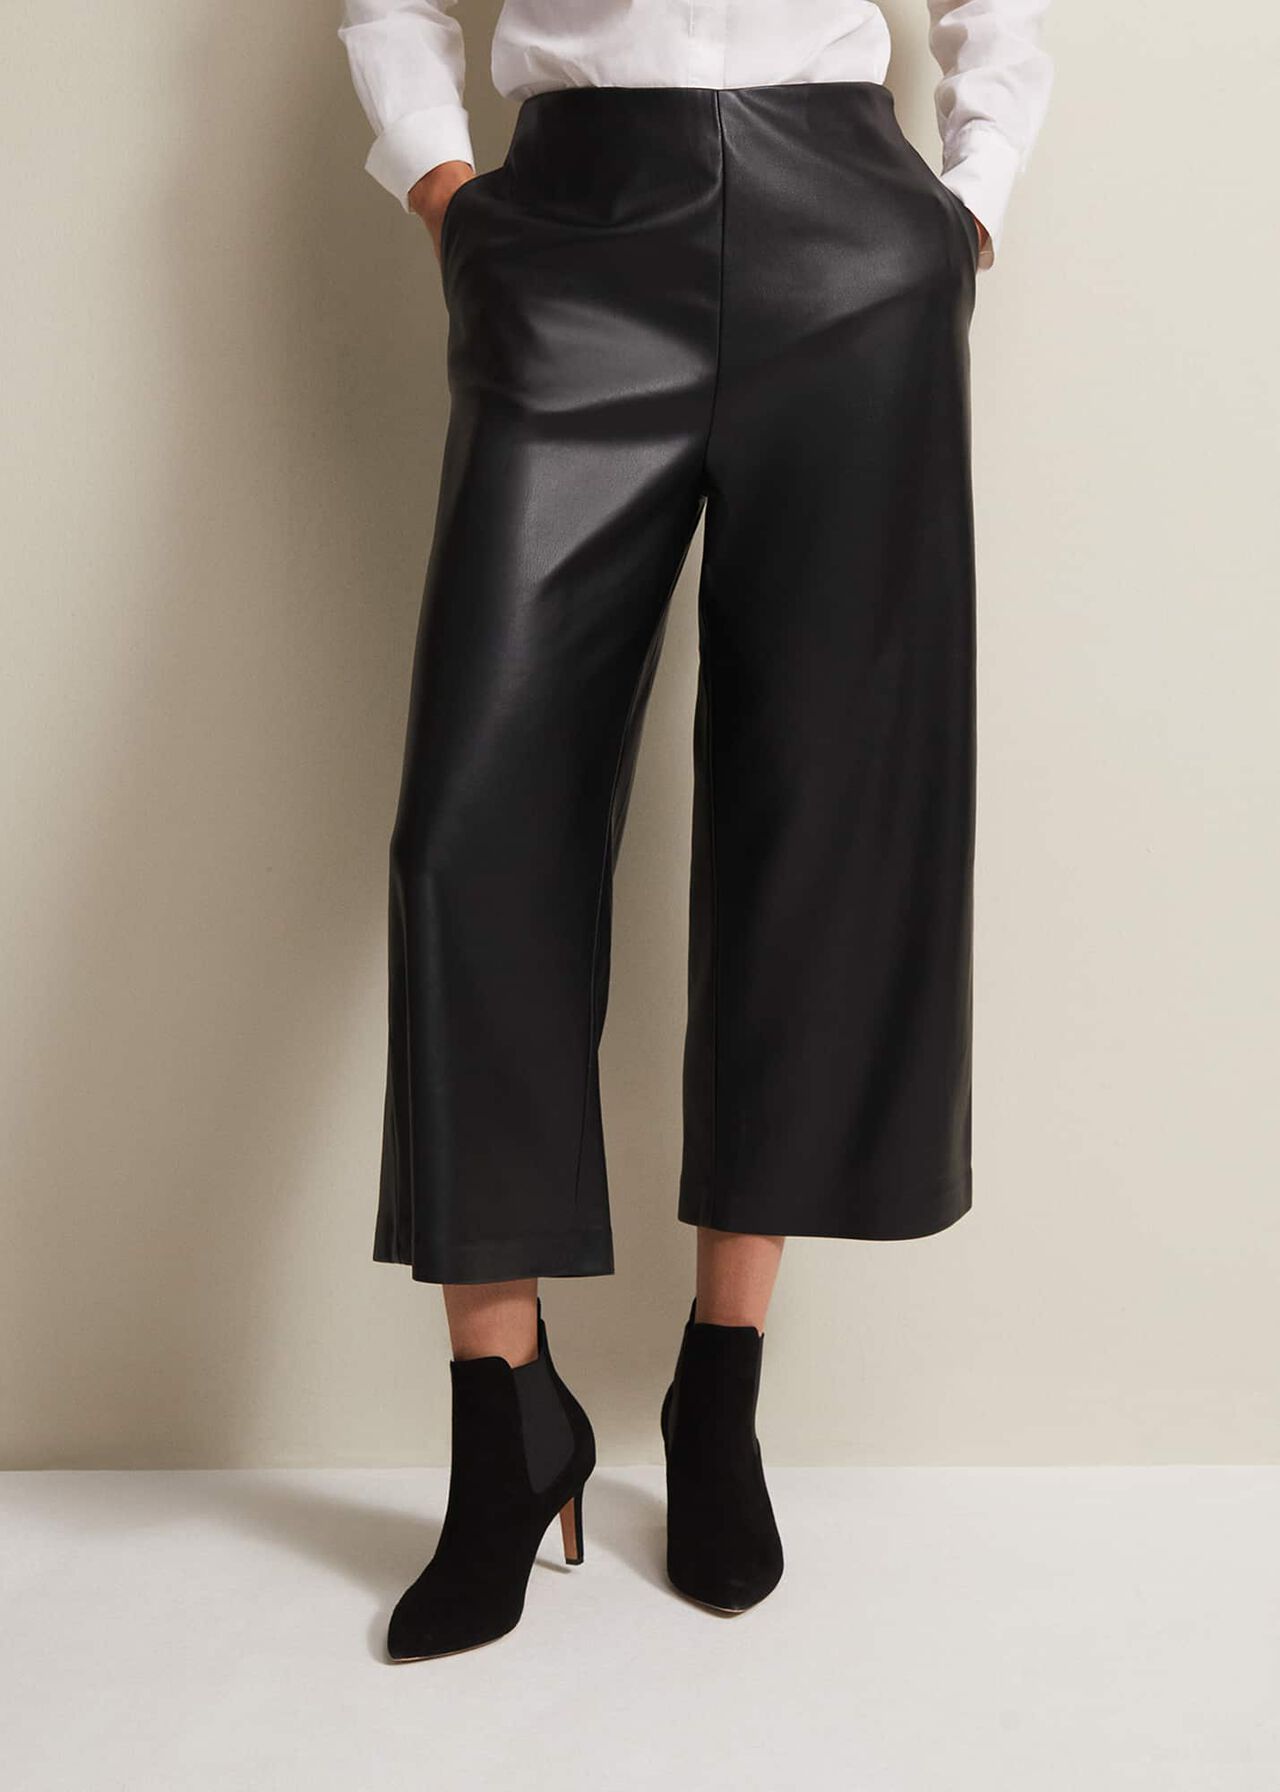 Emeline Black Faux Leather Culottes